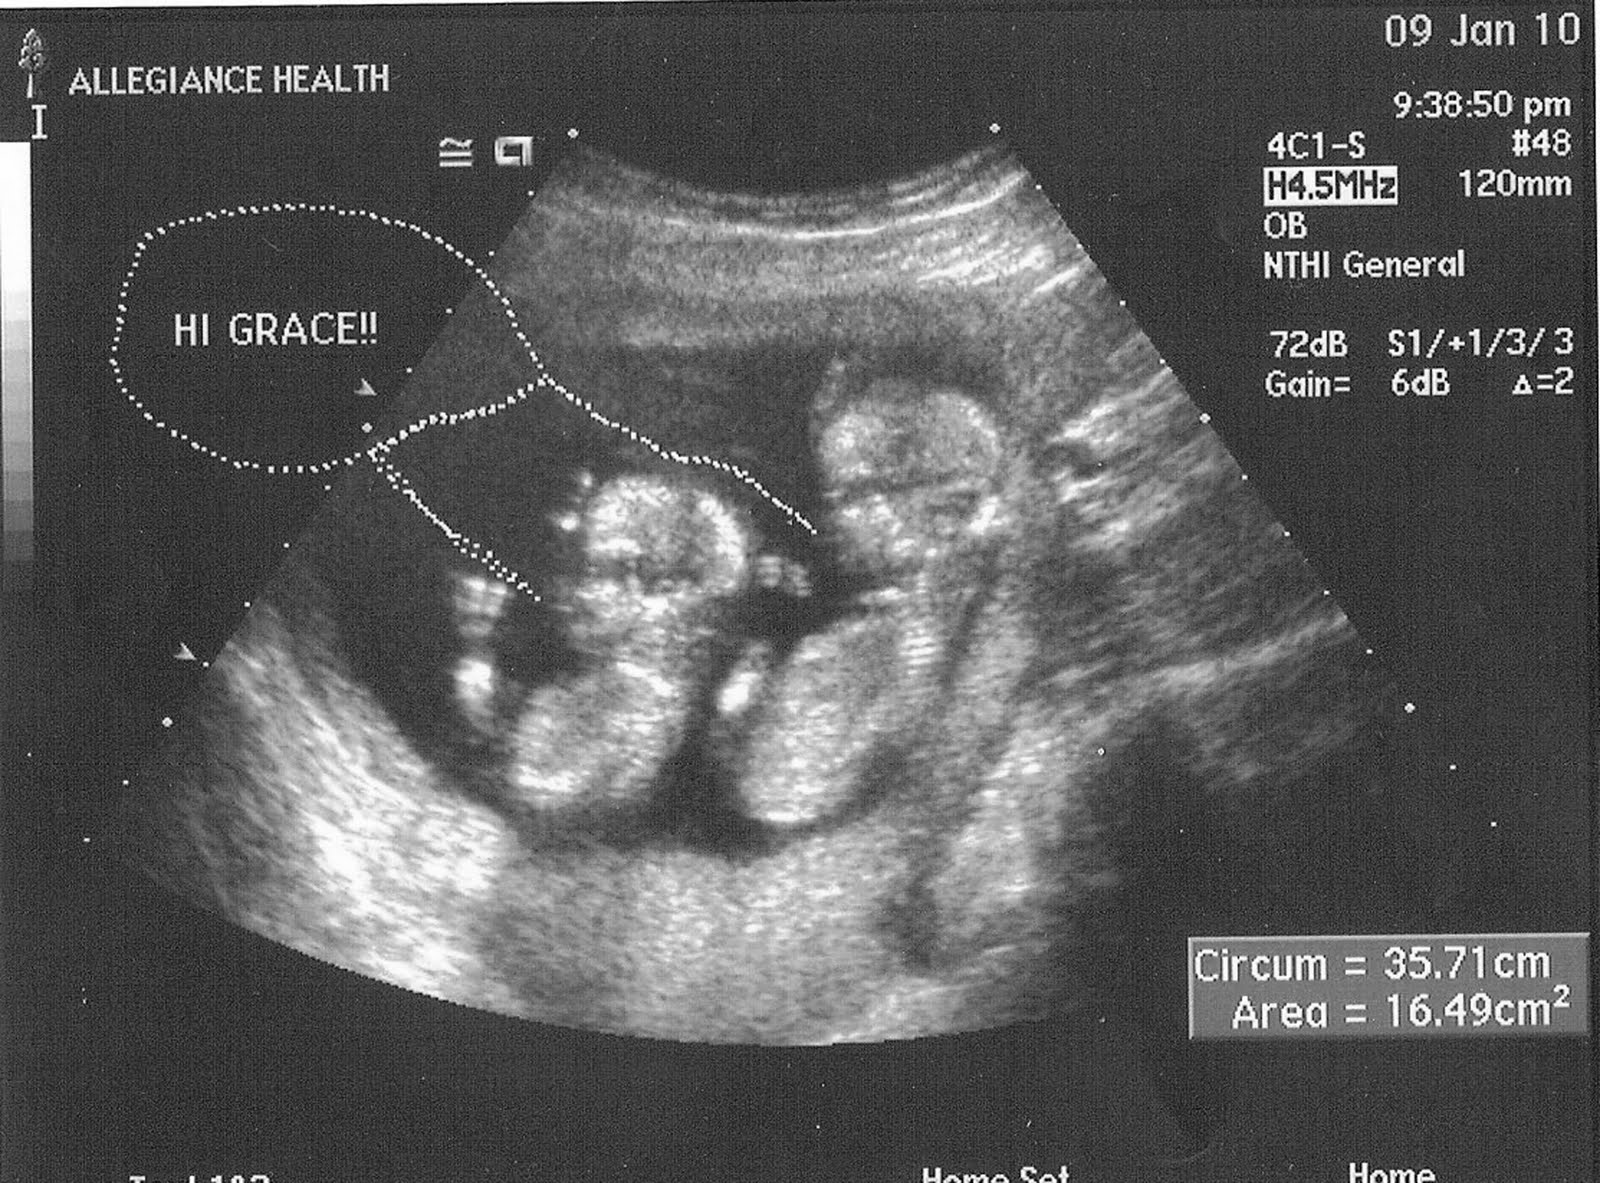 Аборт на 13 неделе беременности